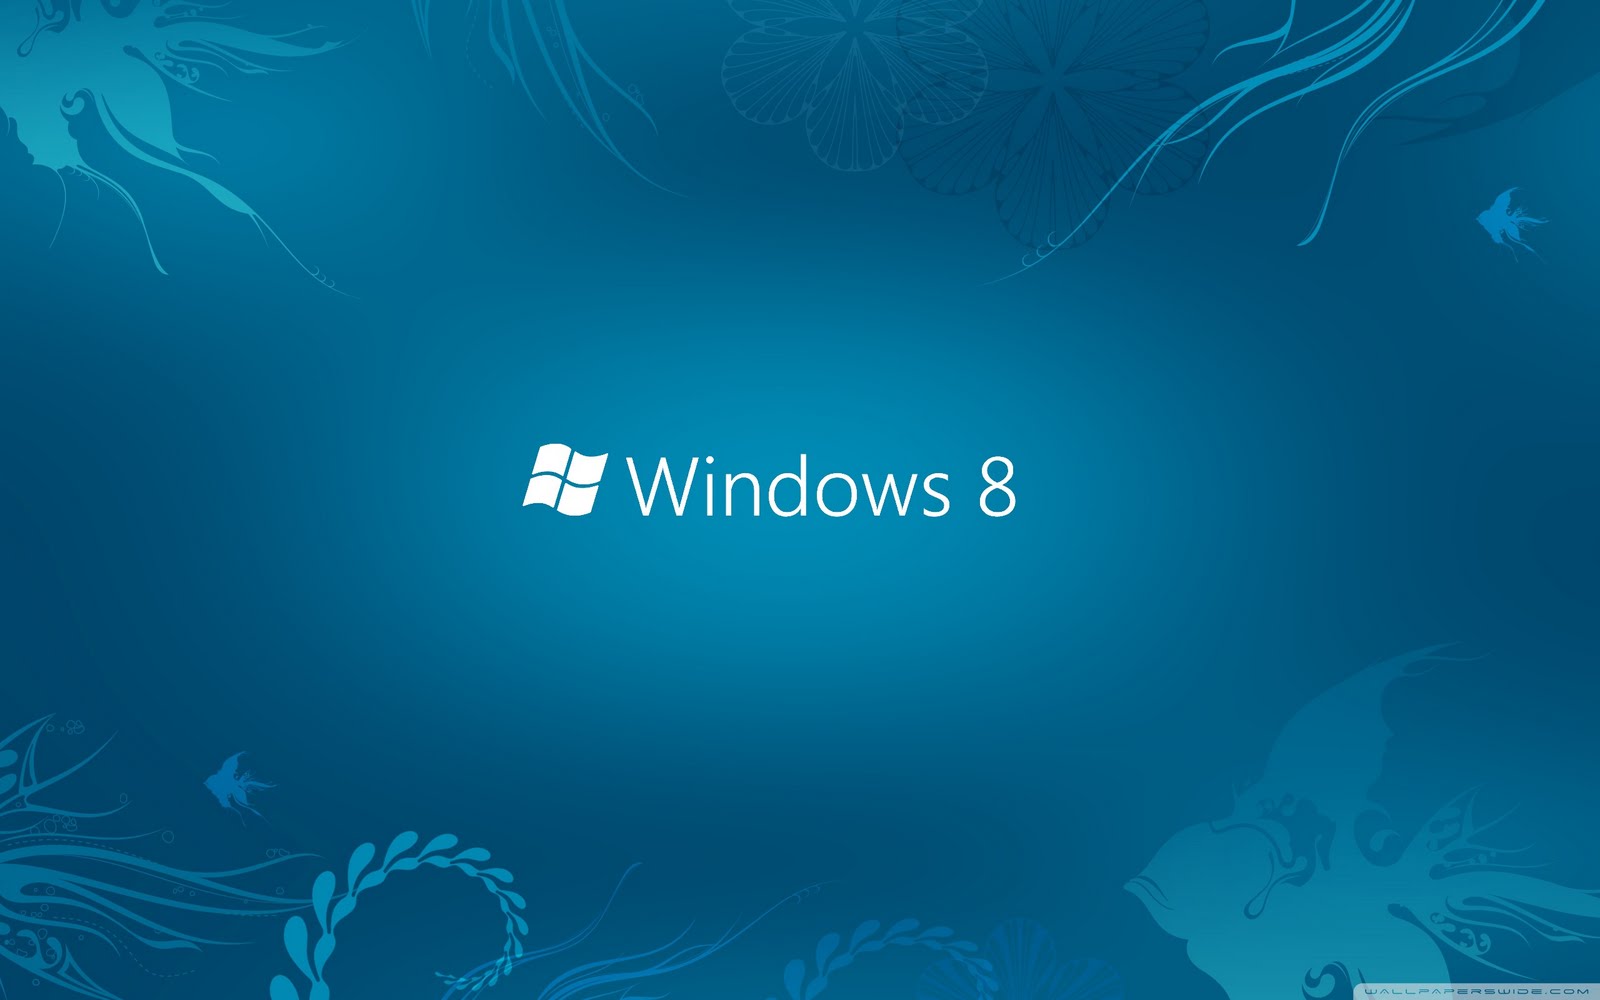 Top 12 Cool Windows 8 HD wallpapers for desktop backgrounds 81 600x375